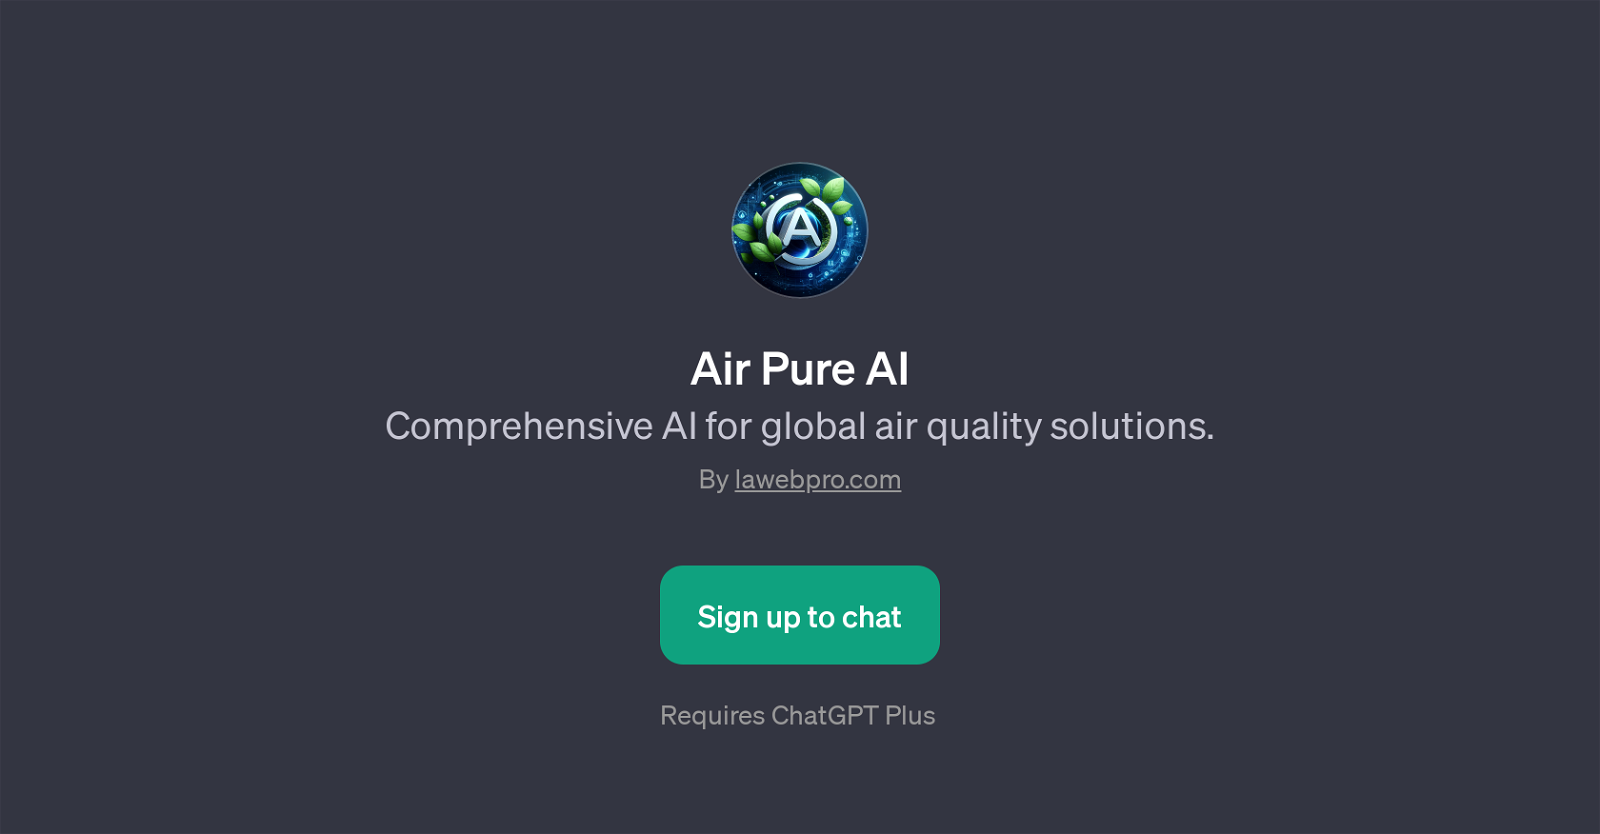 Air Pure AI website